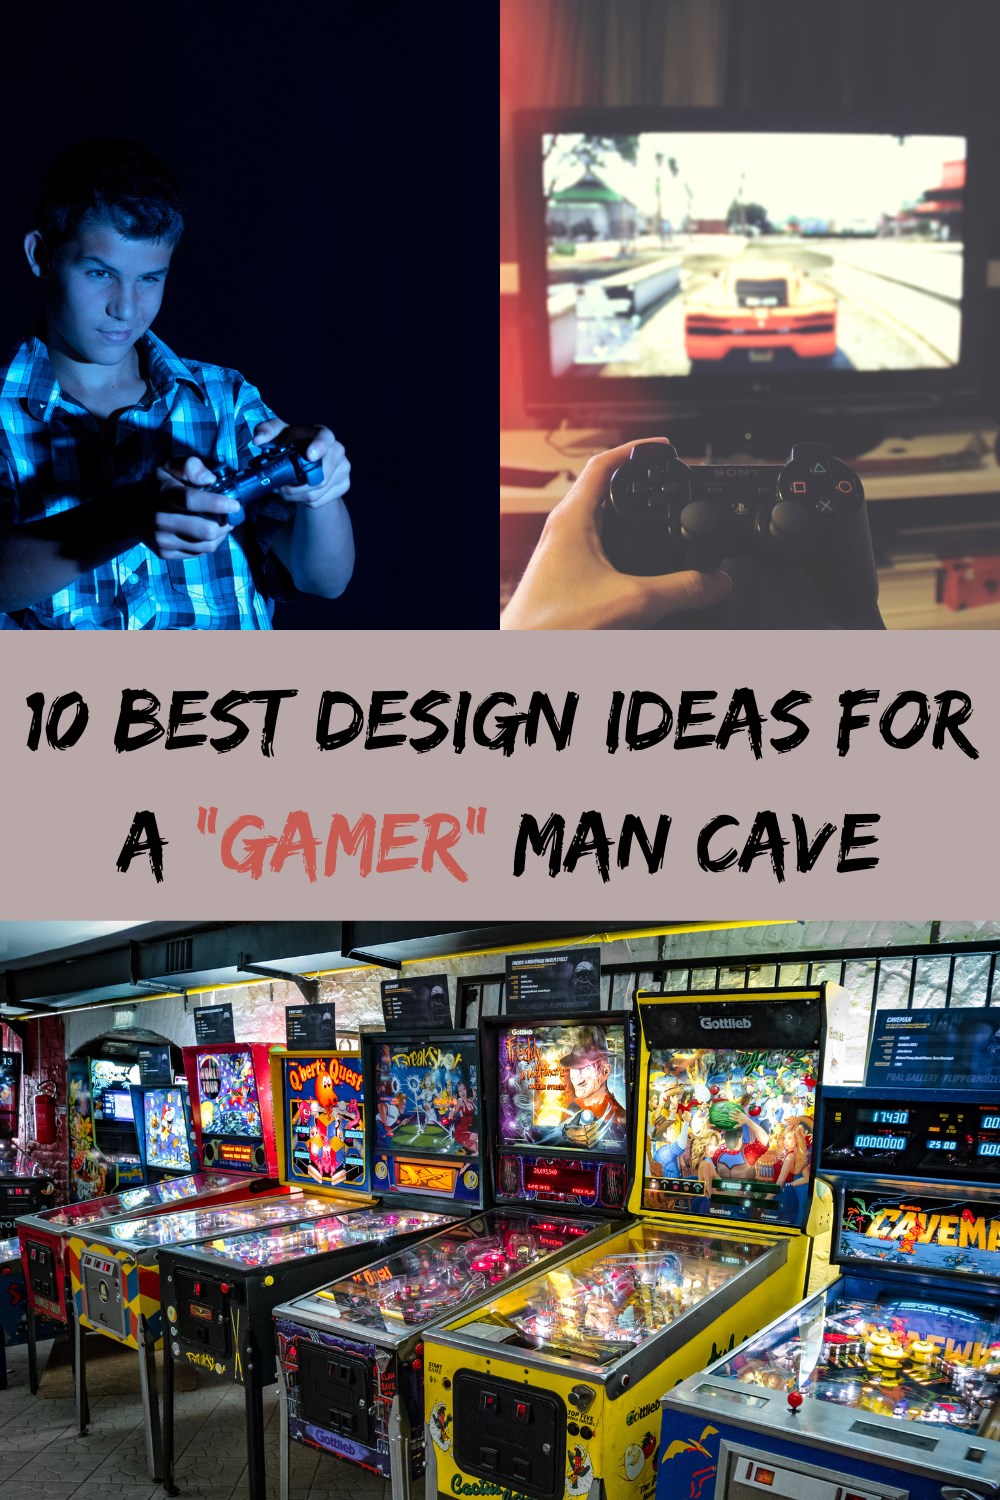 Gamer man cave design ideas